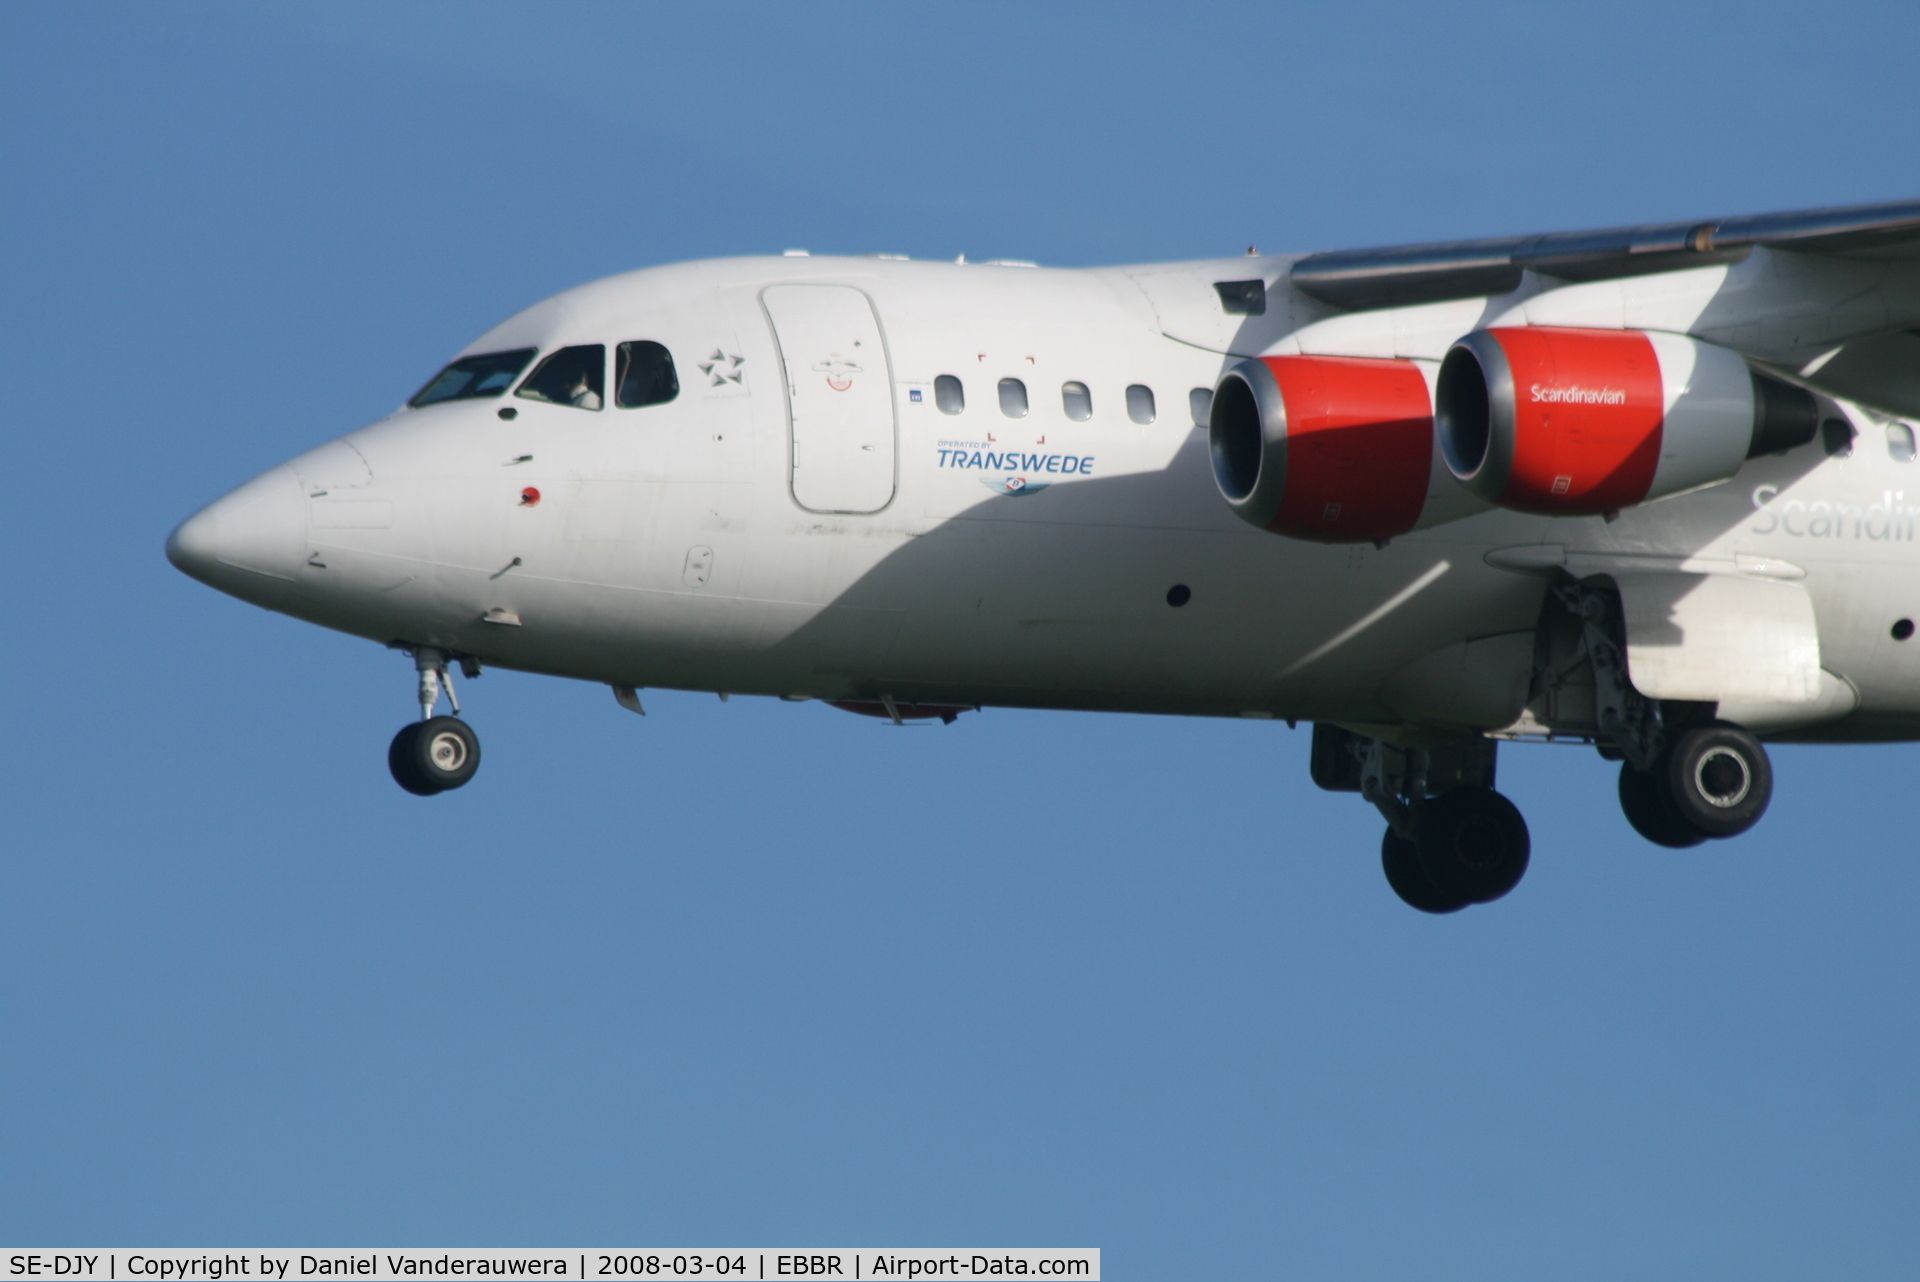 SE-DJY, 1993 British Aerospace Avro 146-RJ70 C/N E1224, arrival of flight SK4743 to rwy 25L